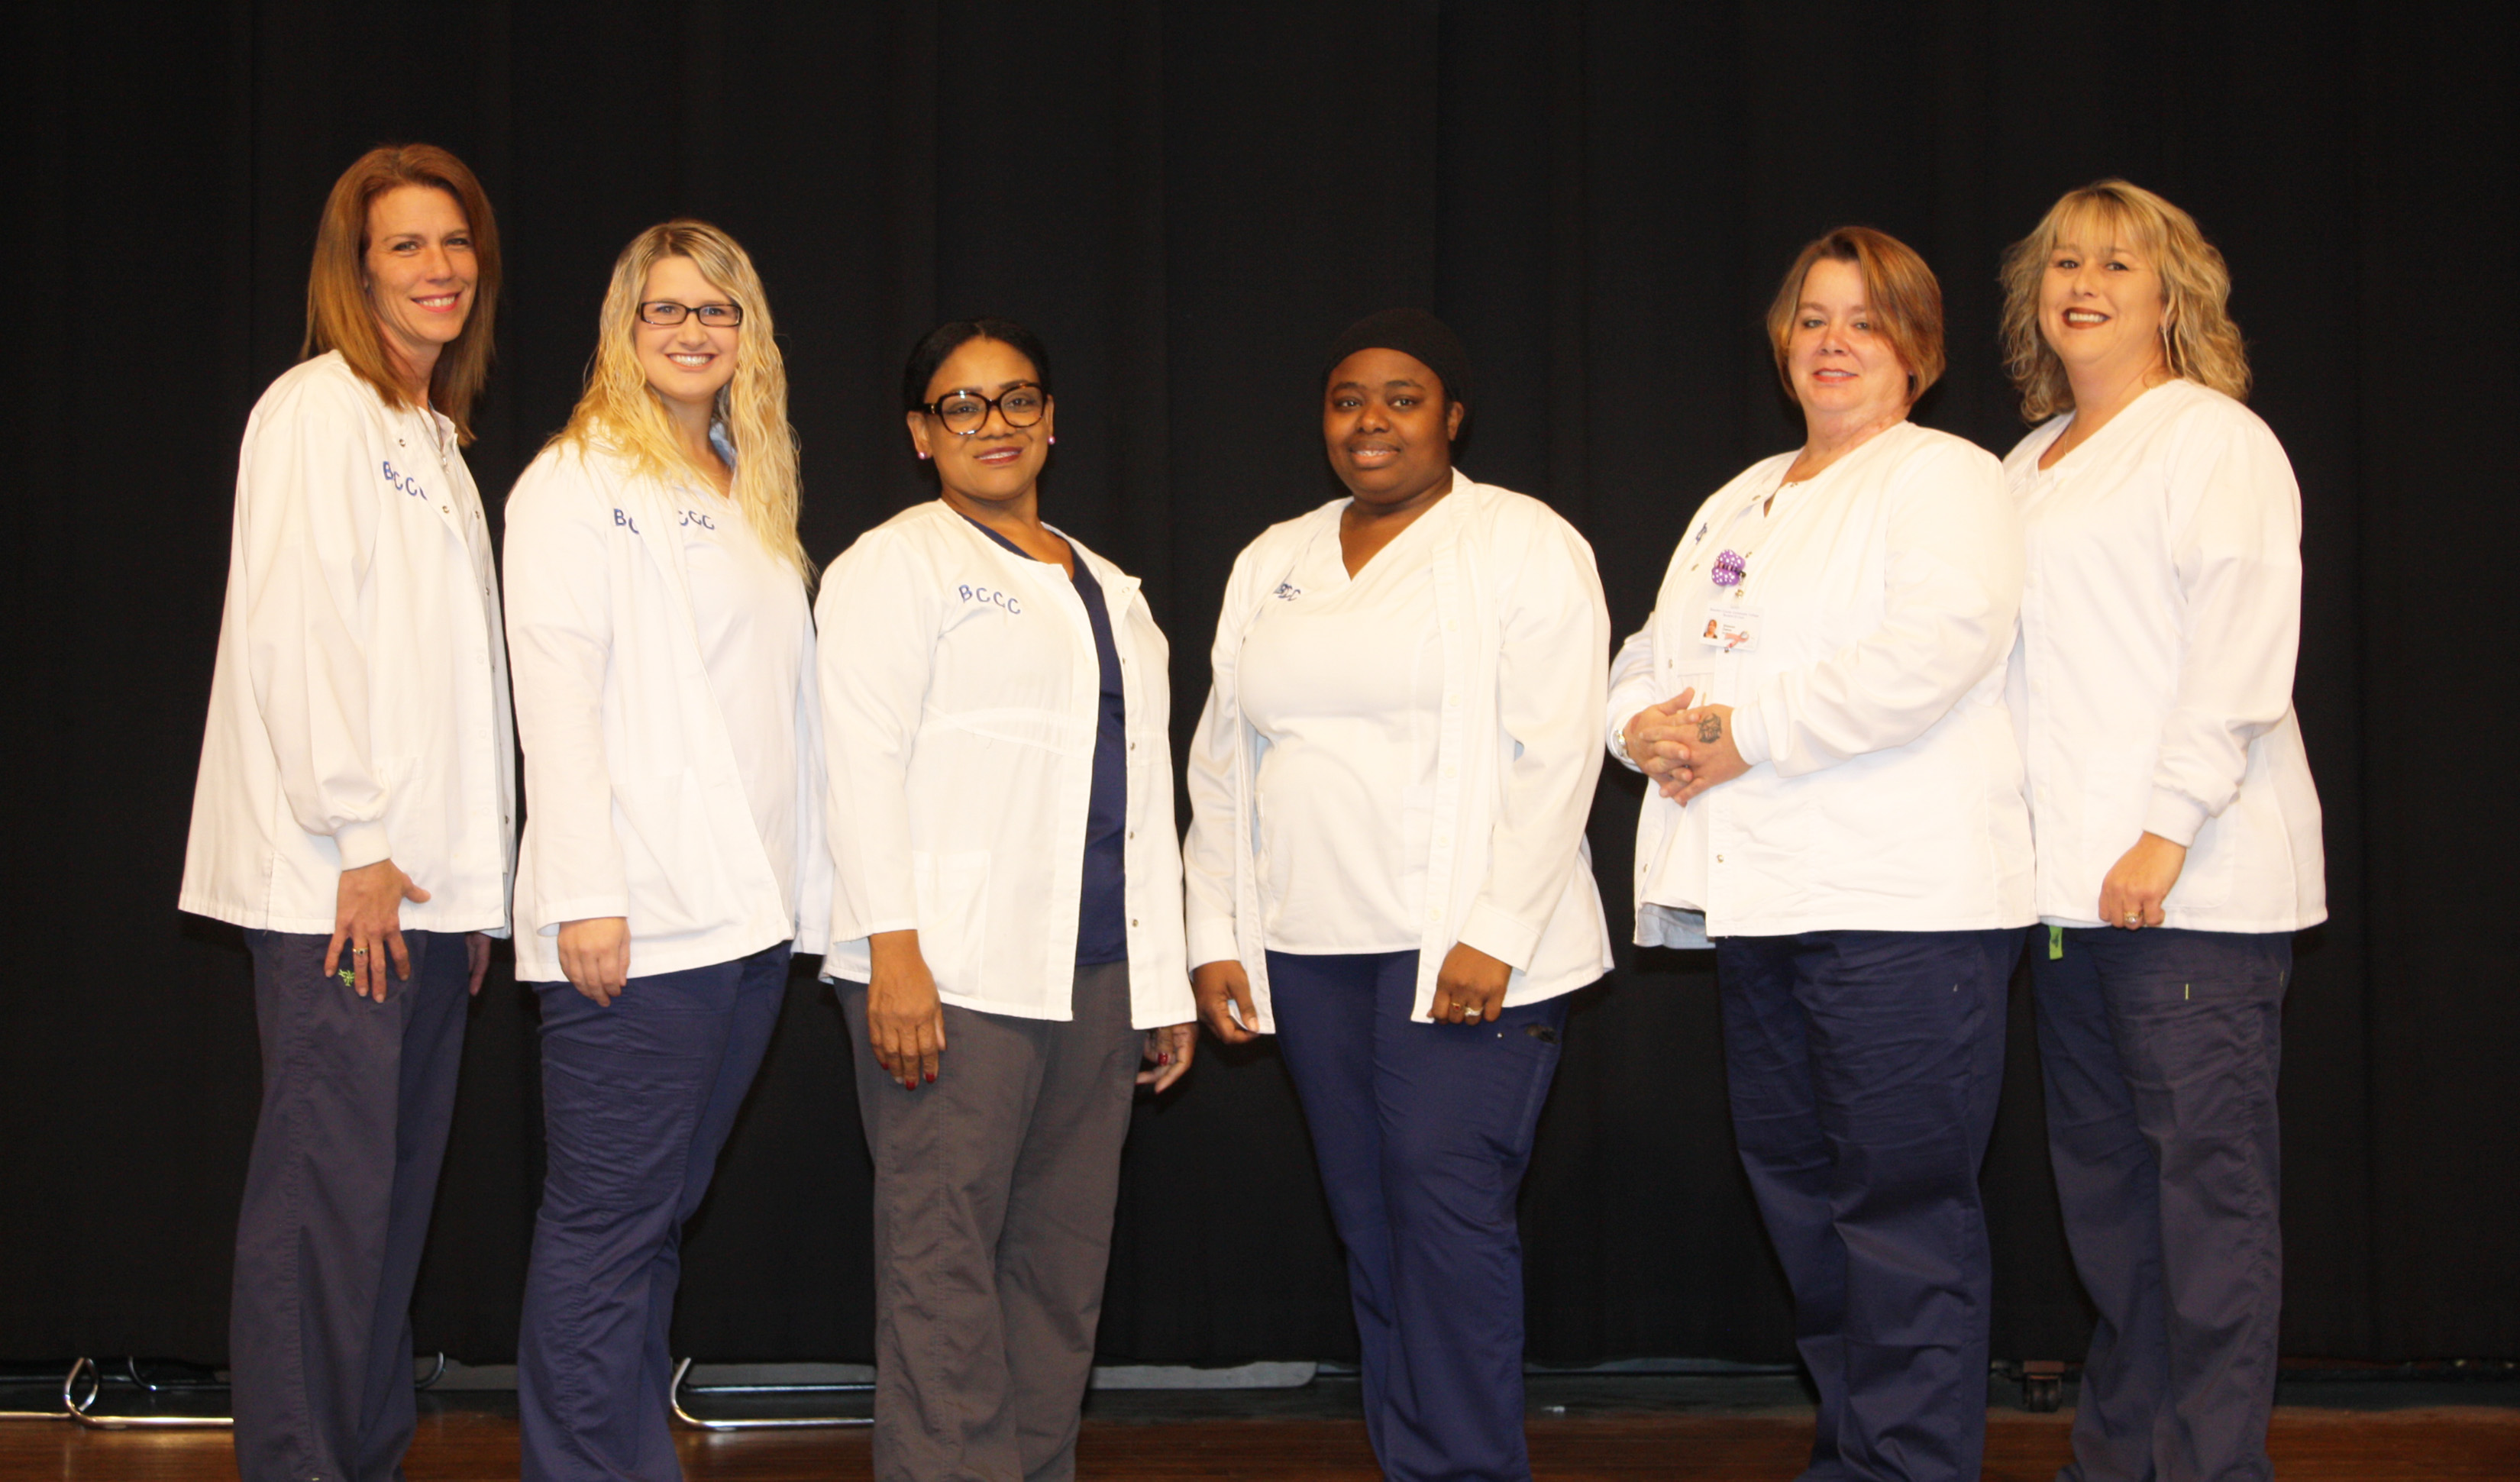 Nurse Aide I graduates: (left to right) Cheryl Mowers, Jordan Rimarski, Bernadette Smallwood, Bettie McCuller, Shannon Owens and Susan Abbott.